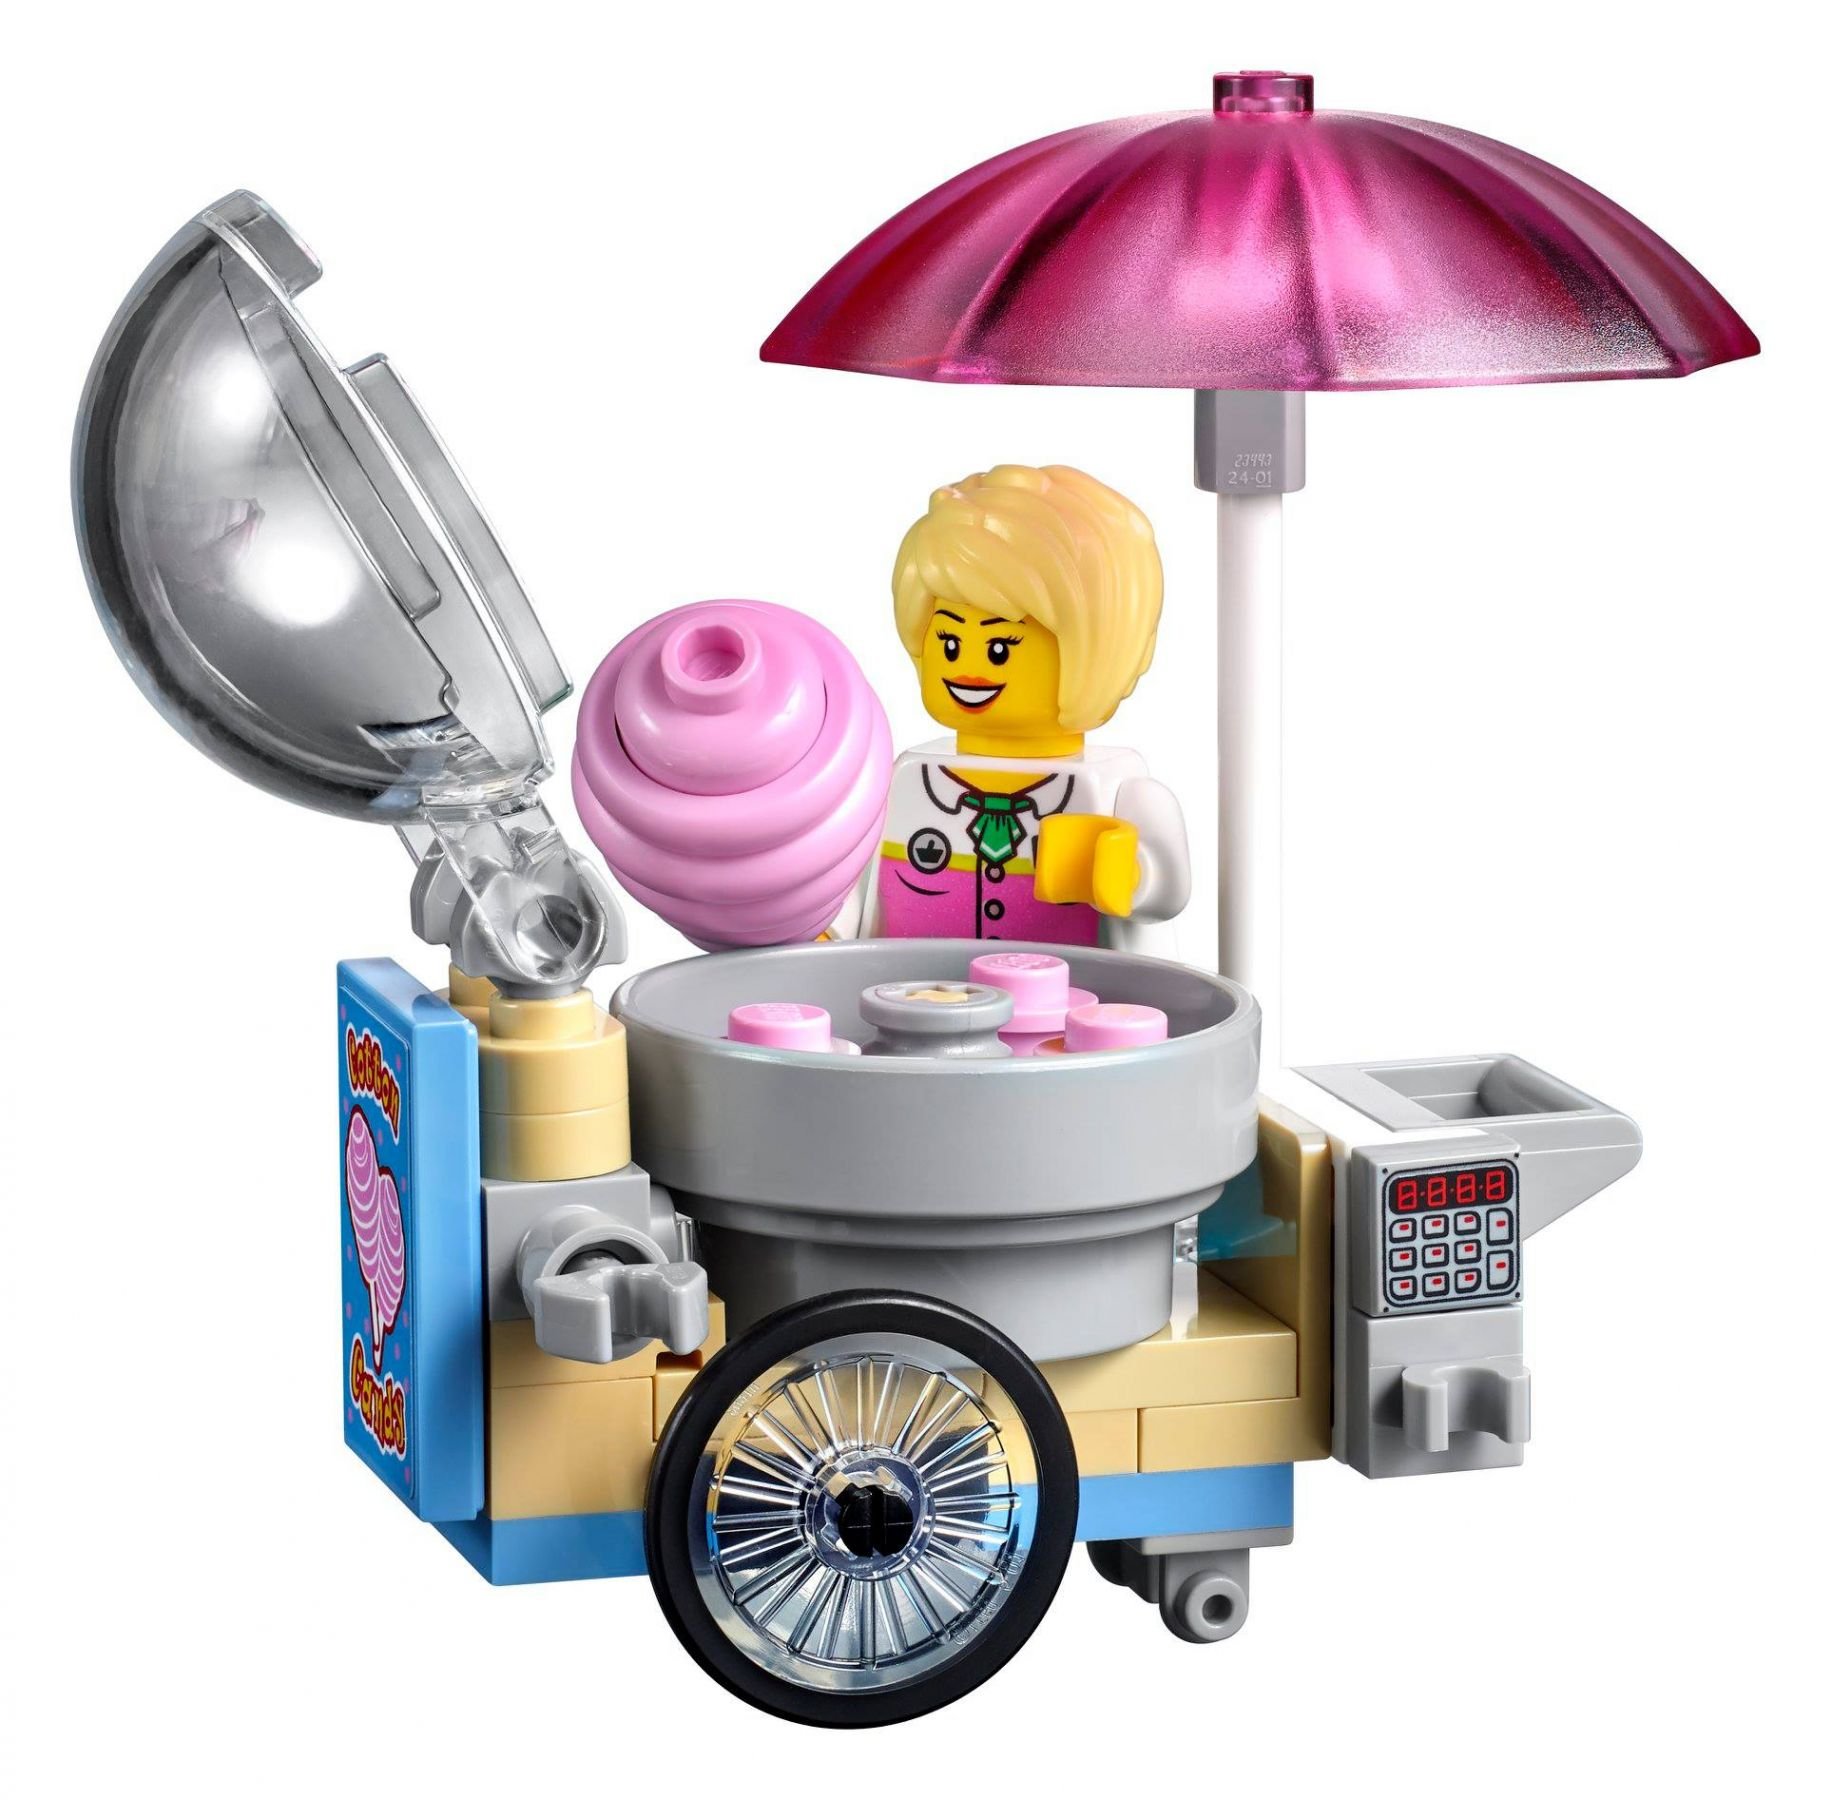 LEGO Advanced Models 10261 Achterbahn LEGO_Creator_Expert_10261_RollerCoaster_Achterbahn_img07.jpg